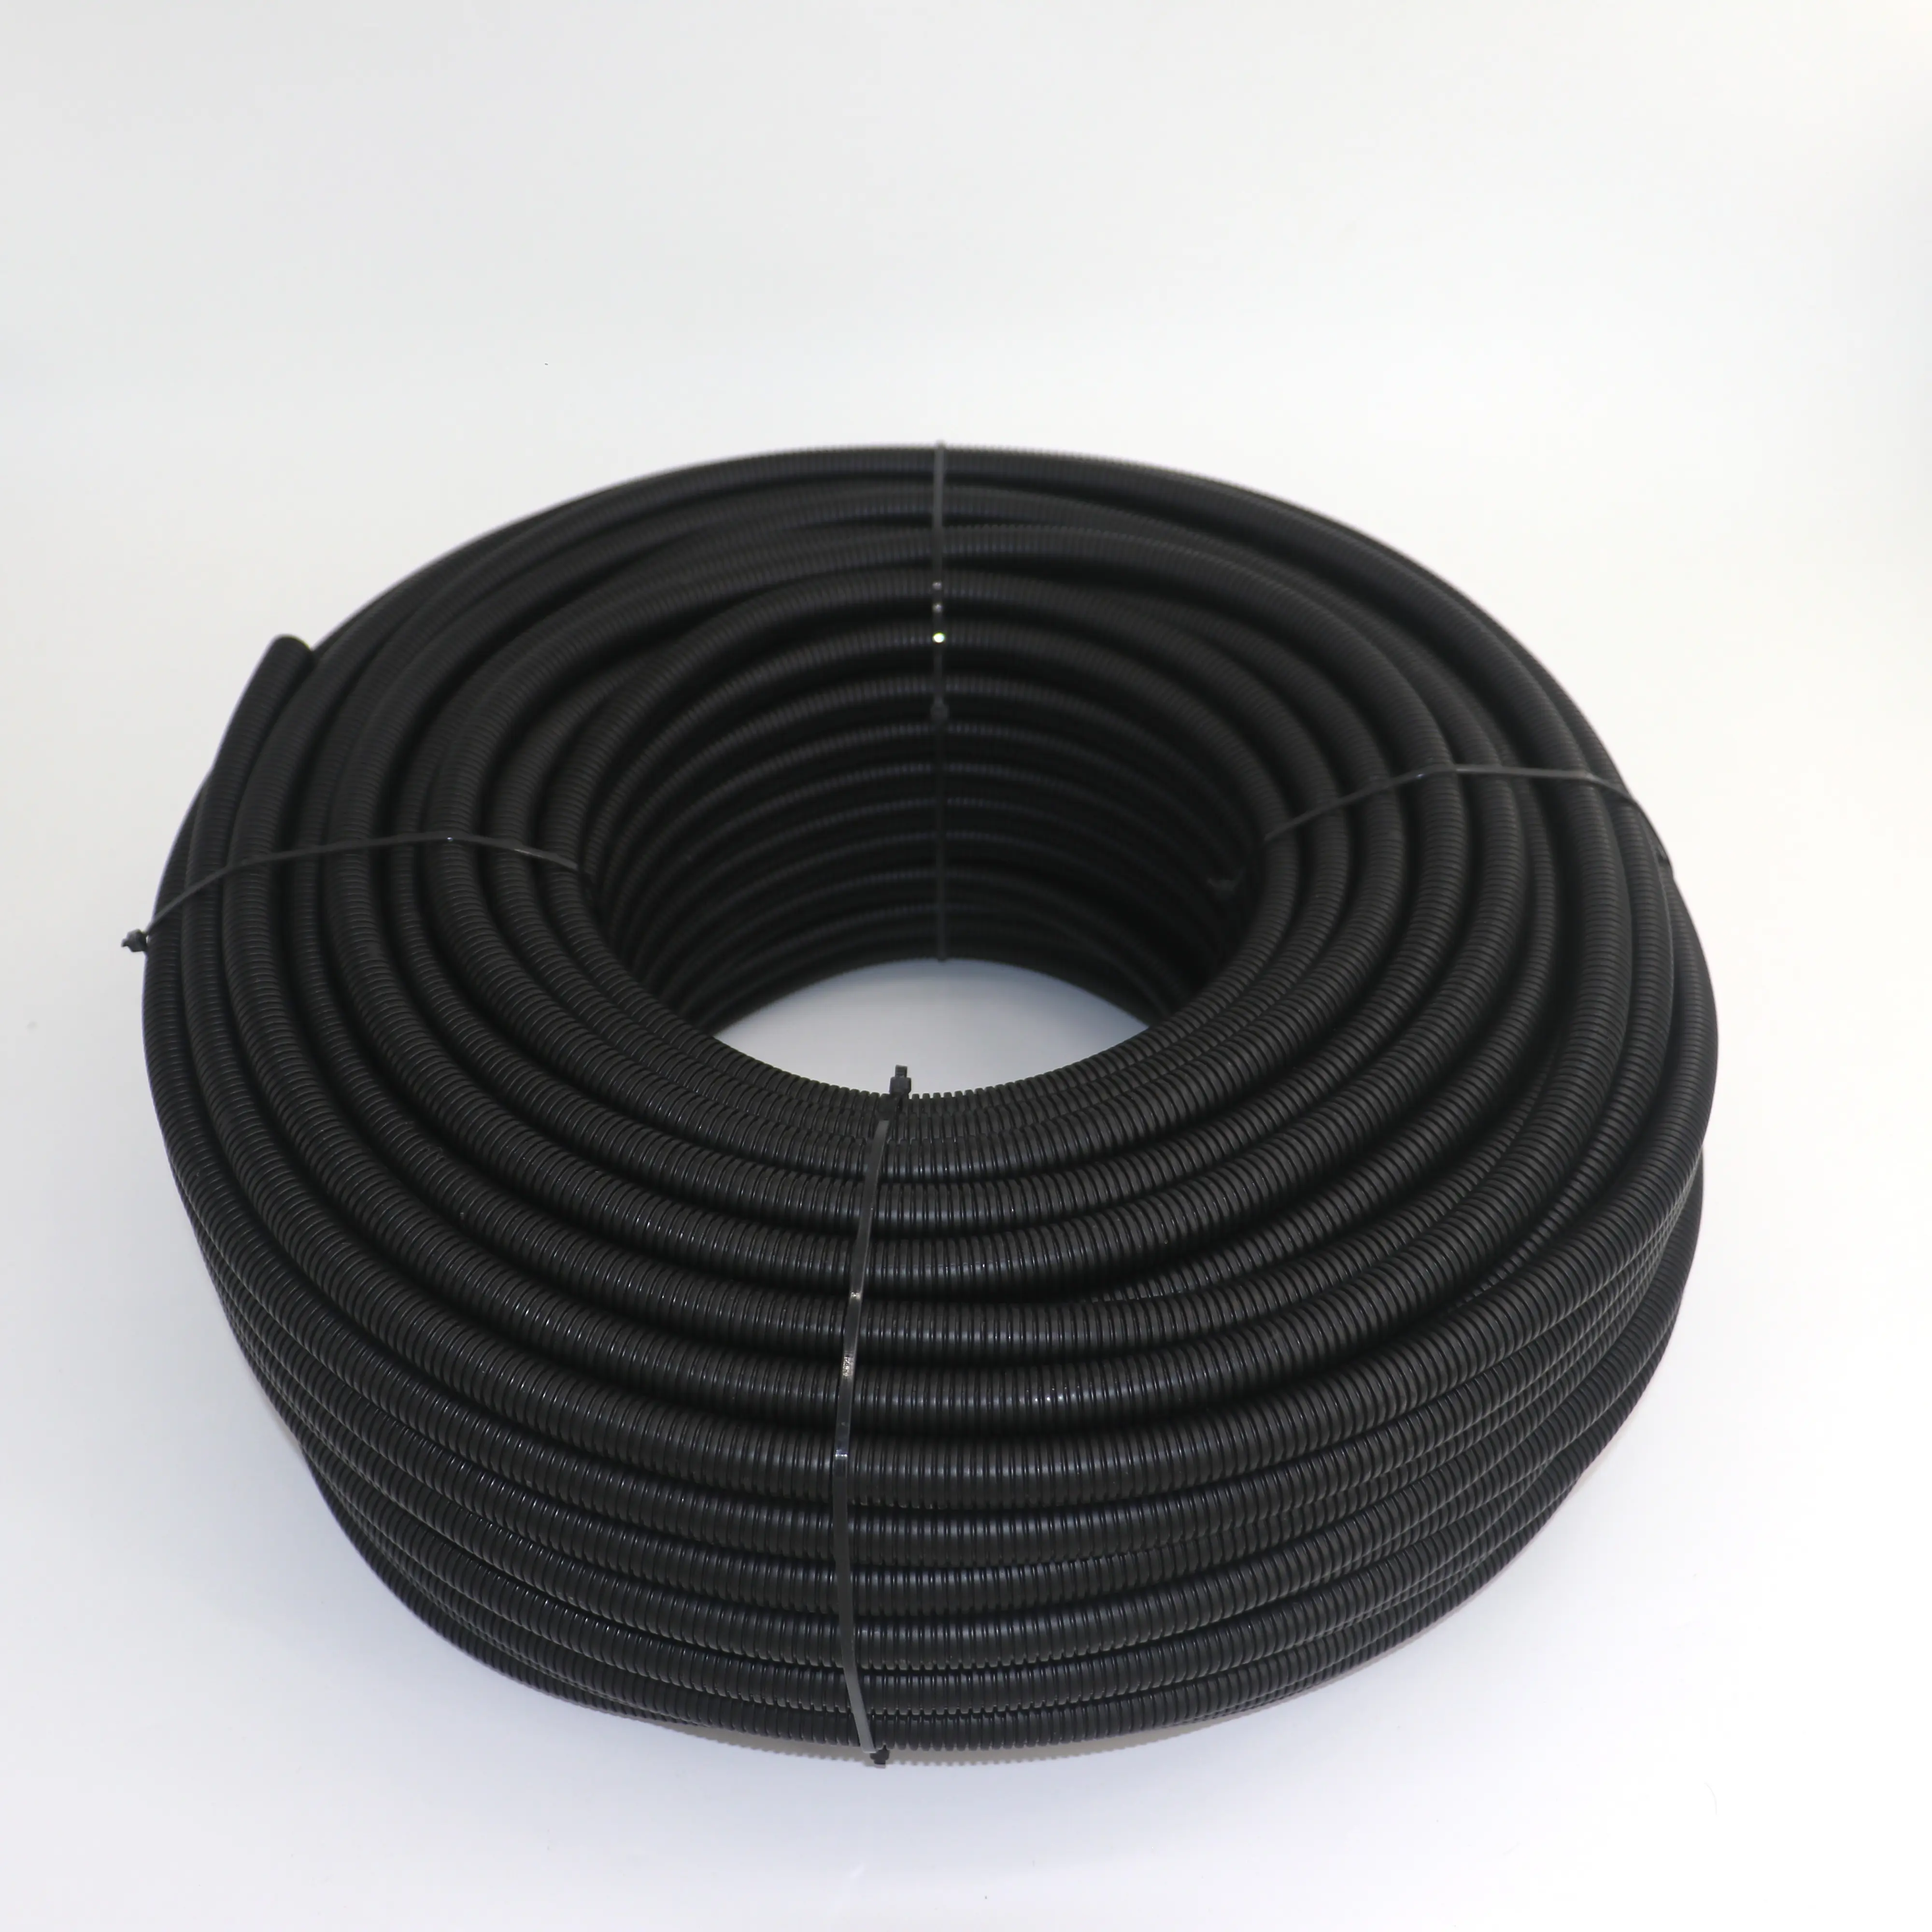 Cable Conduit Pvc Flexible Plastic White/Black Color Corrugate Pipe/Hose Corrugated Flexible Pipe